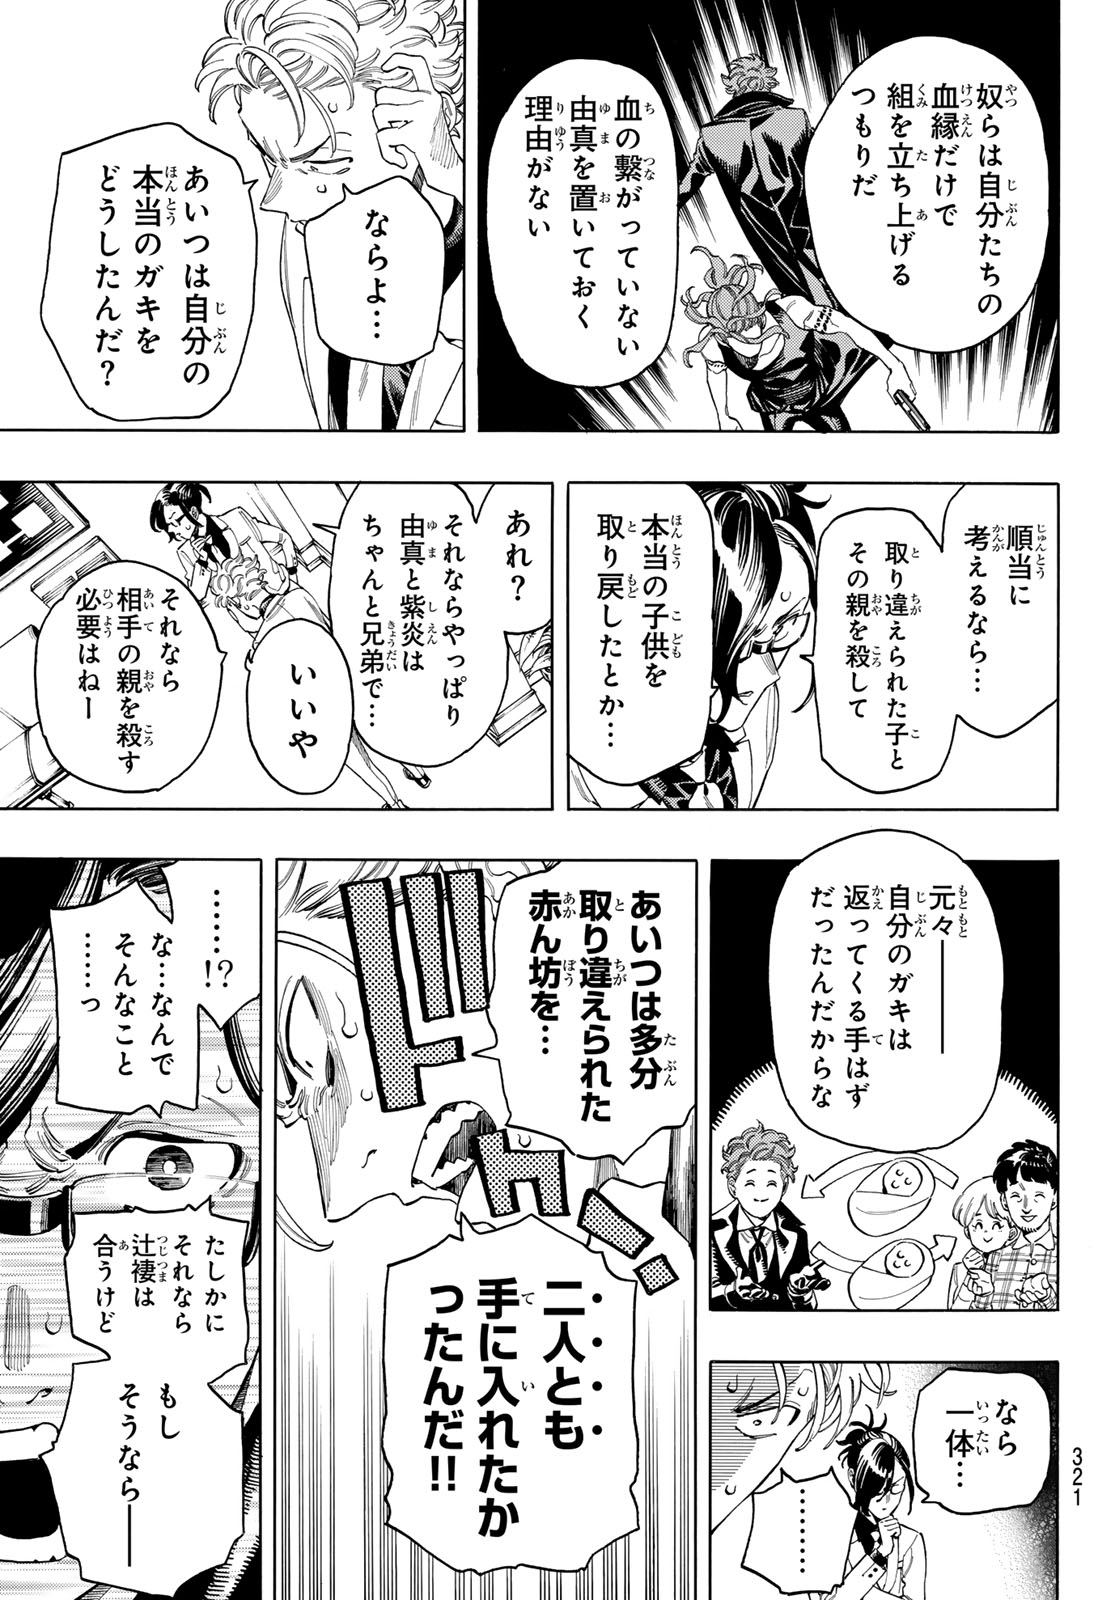 Akabane Honeko no Bodyguard - Chapter 84 - Page 15